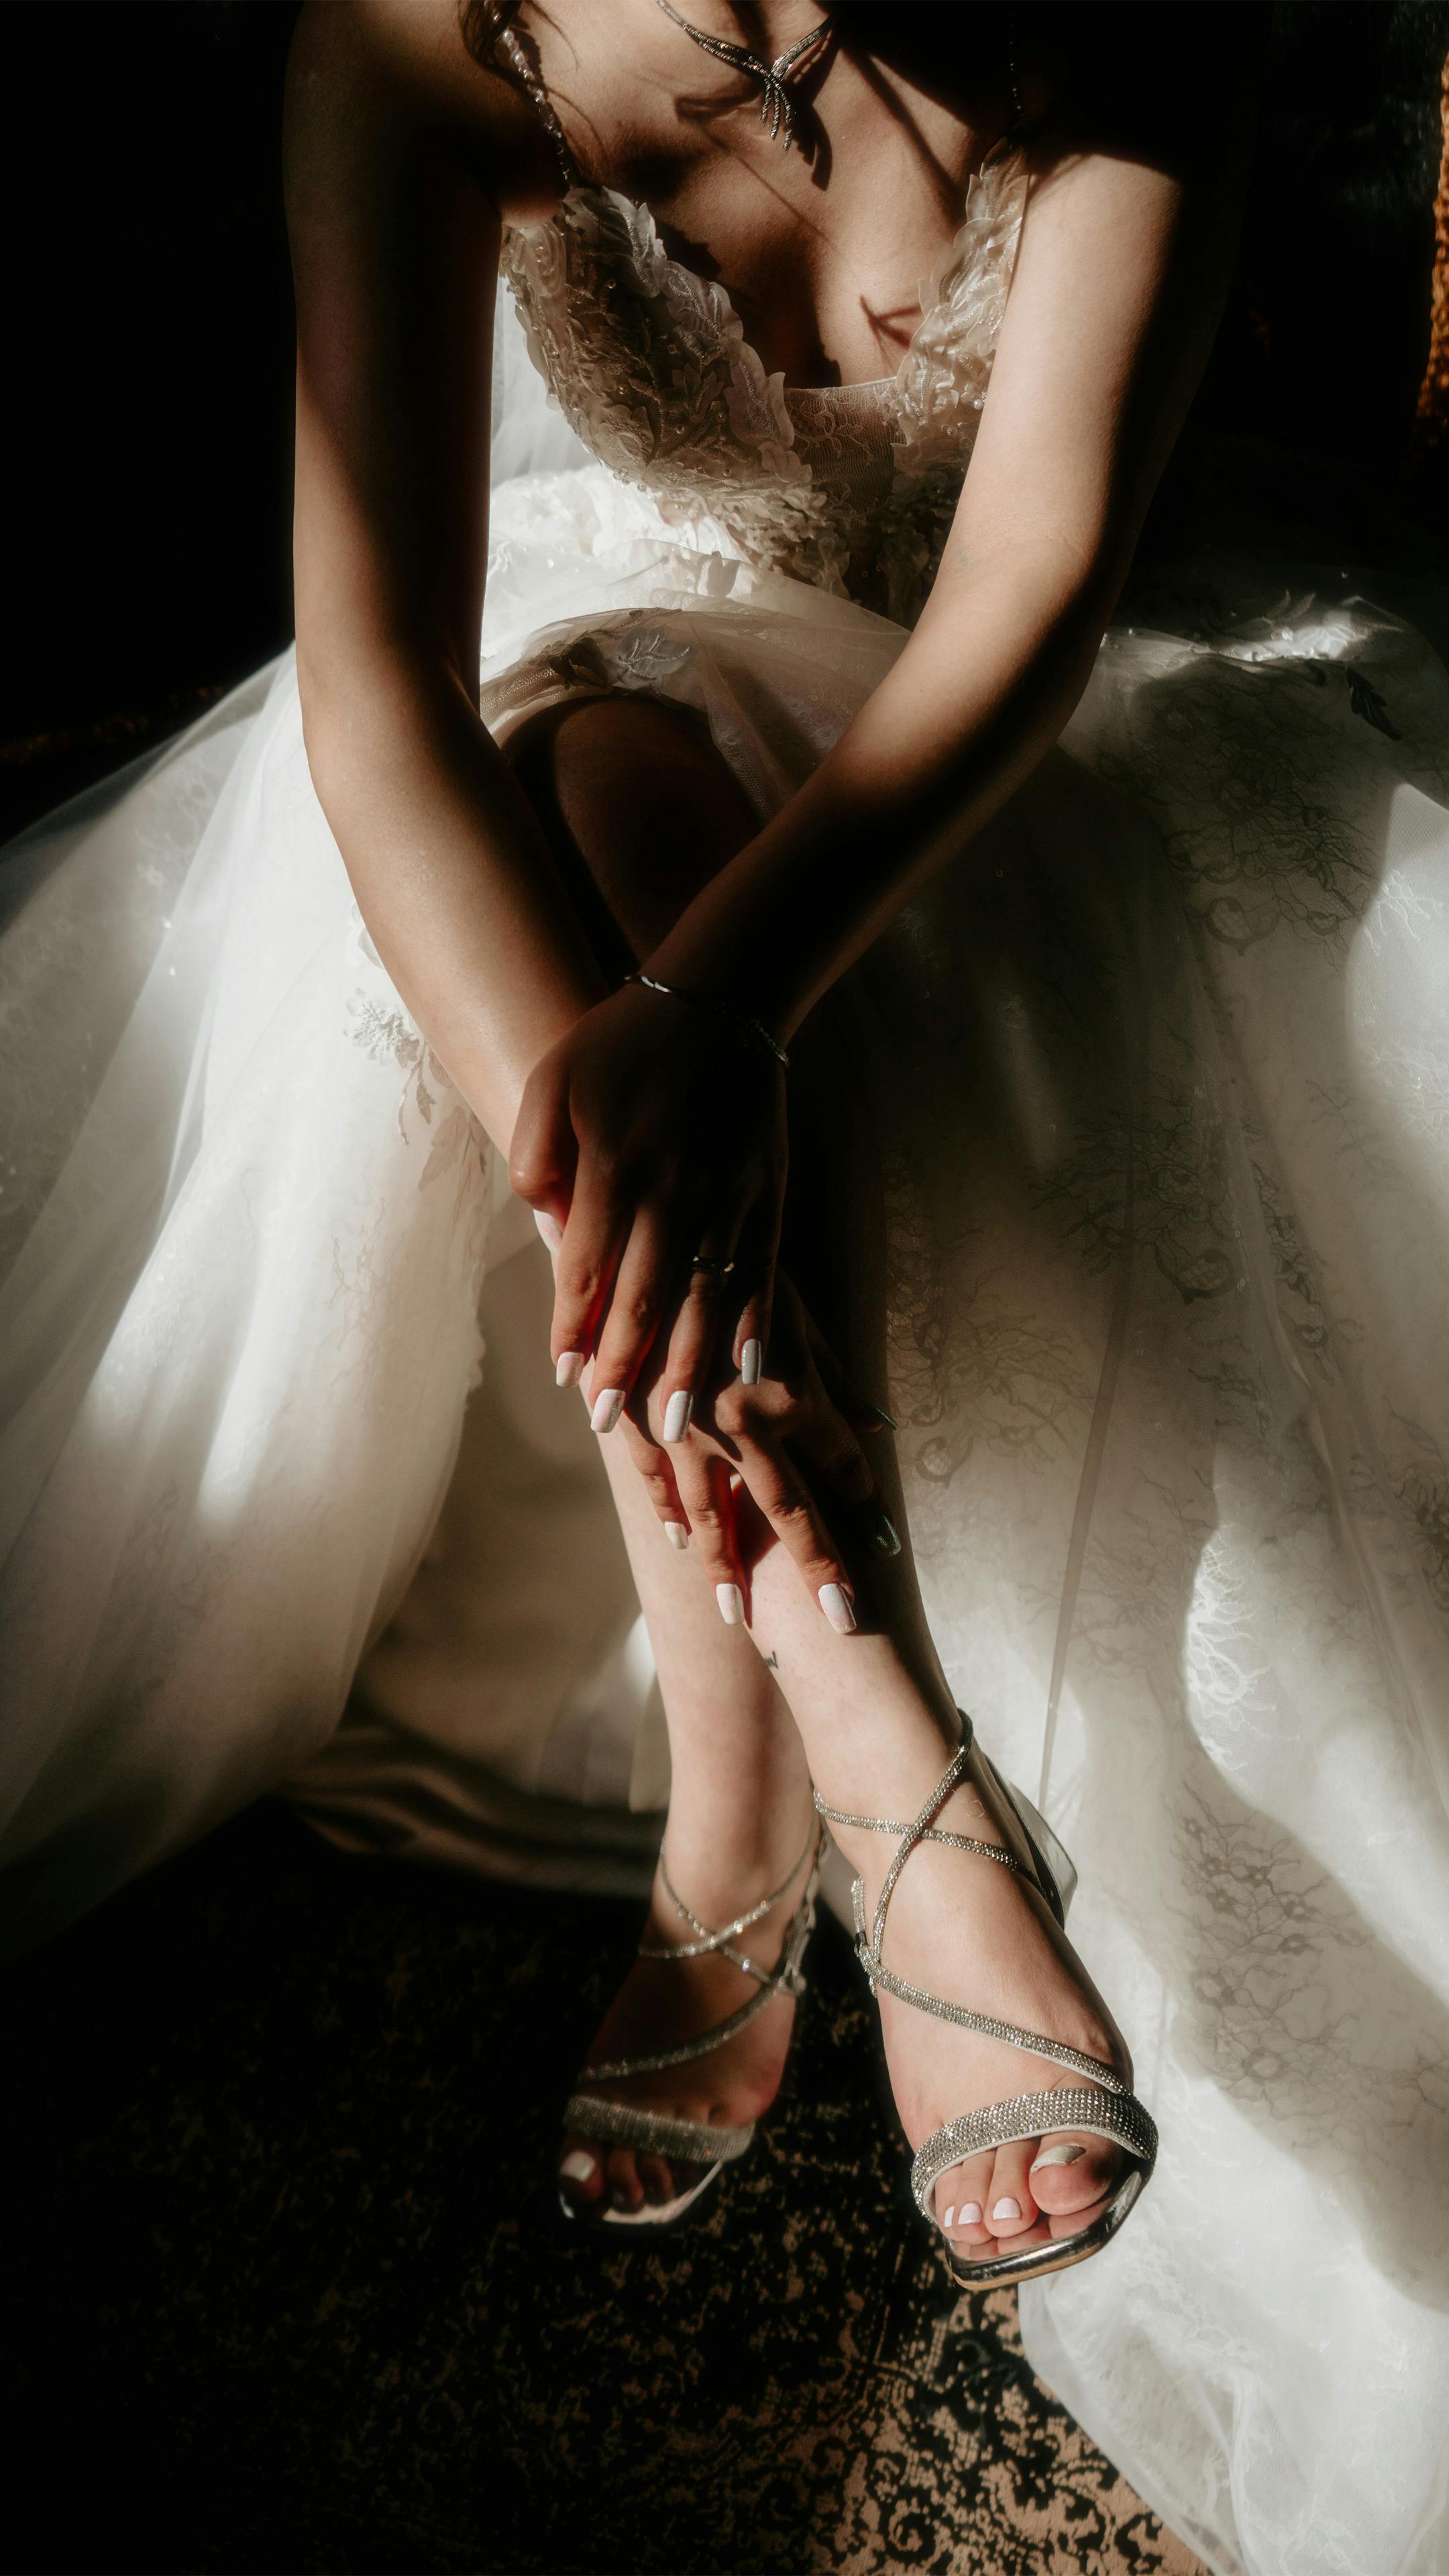 Une femme en robe de mariée | Source : Pexels